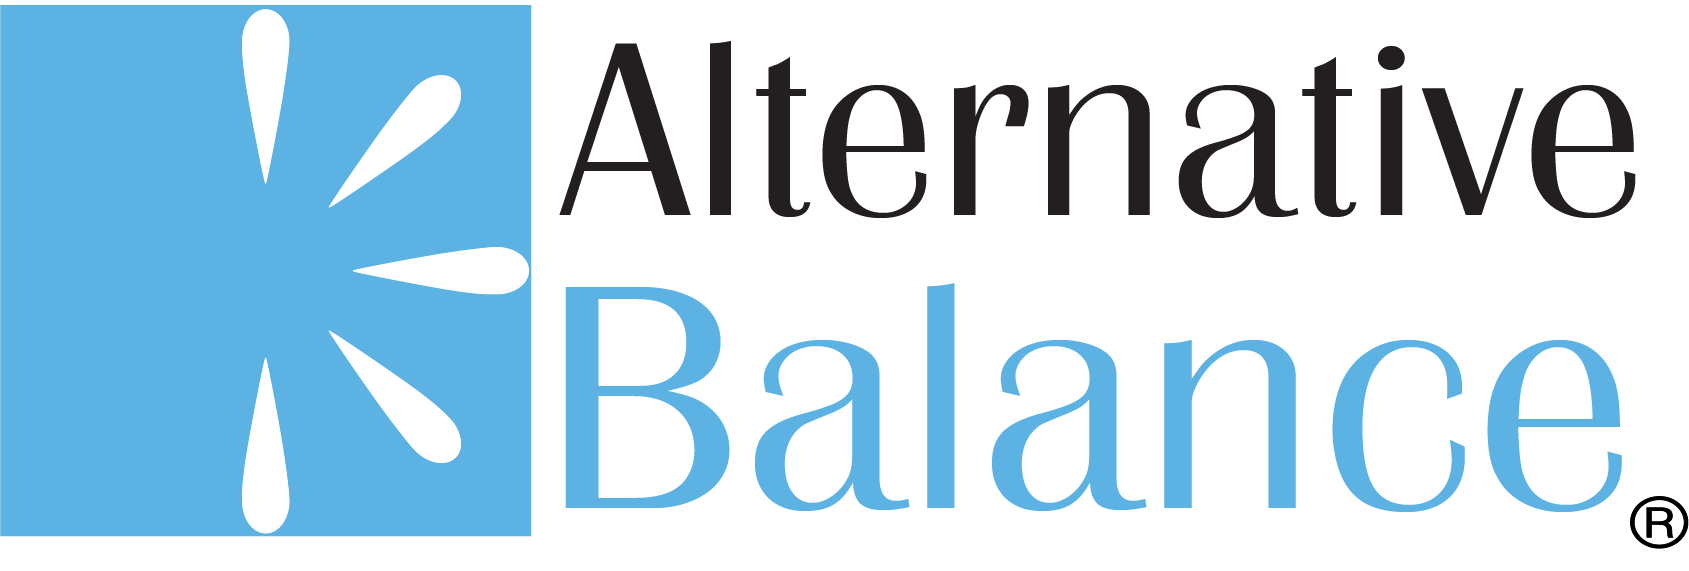 Alternative Balance Logo with Registration Mark